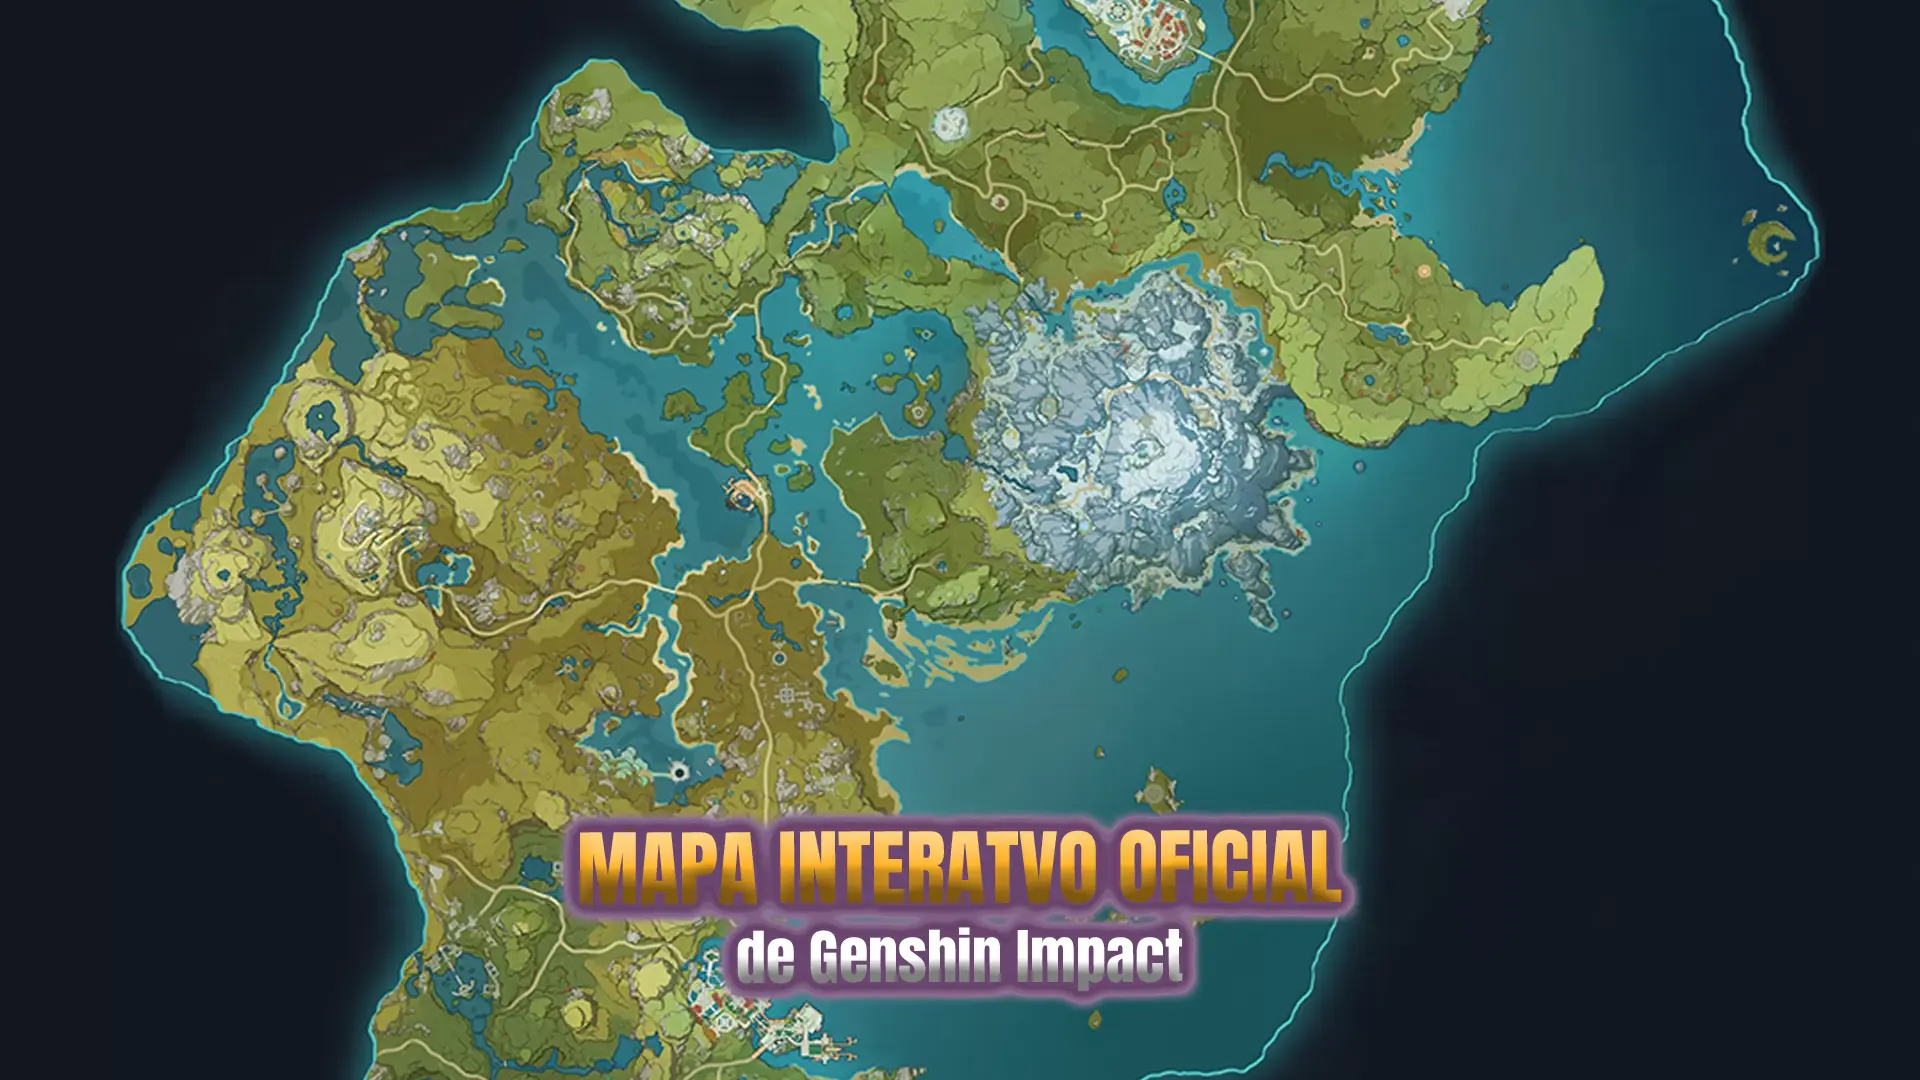 Genshin Impact - Códigos de promocionais de resgate (Julho 2021)